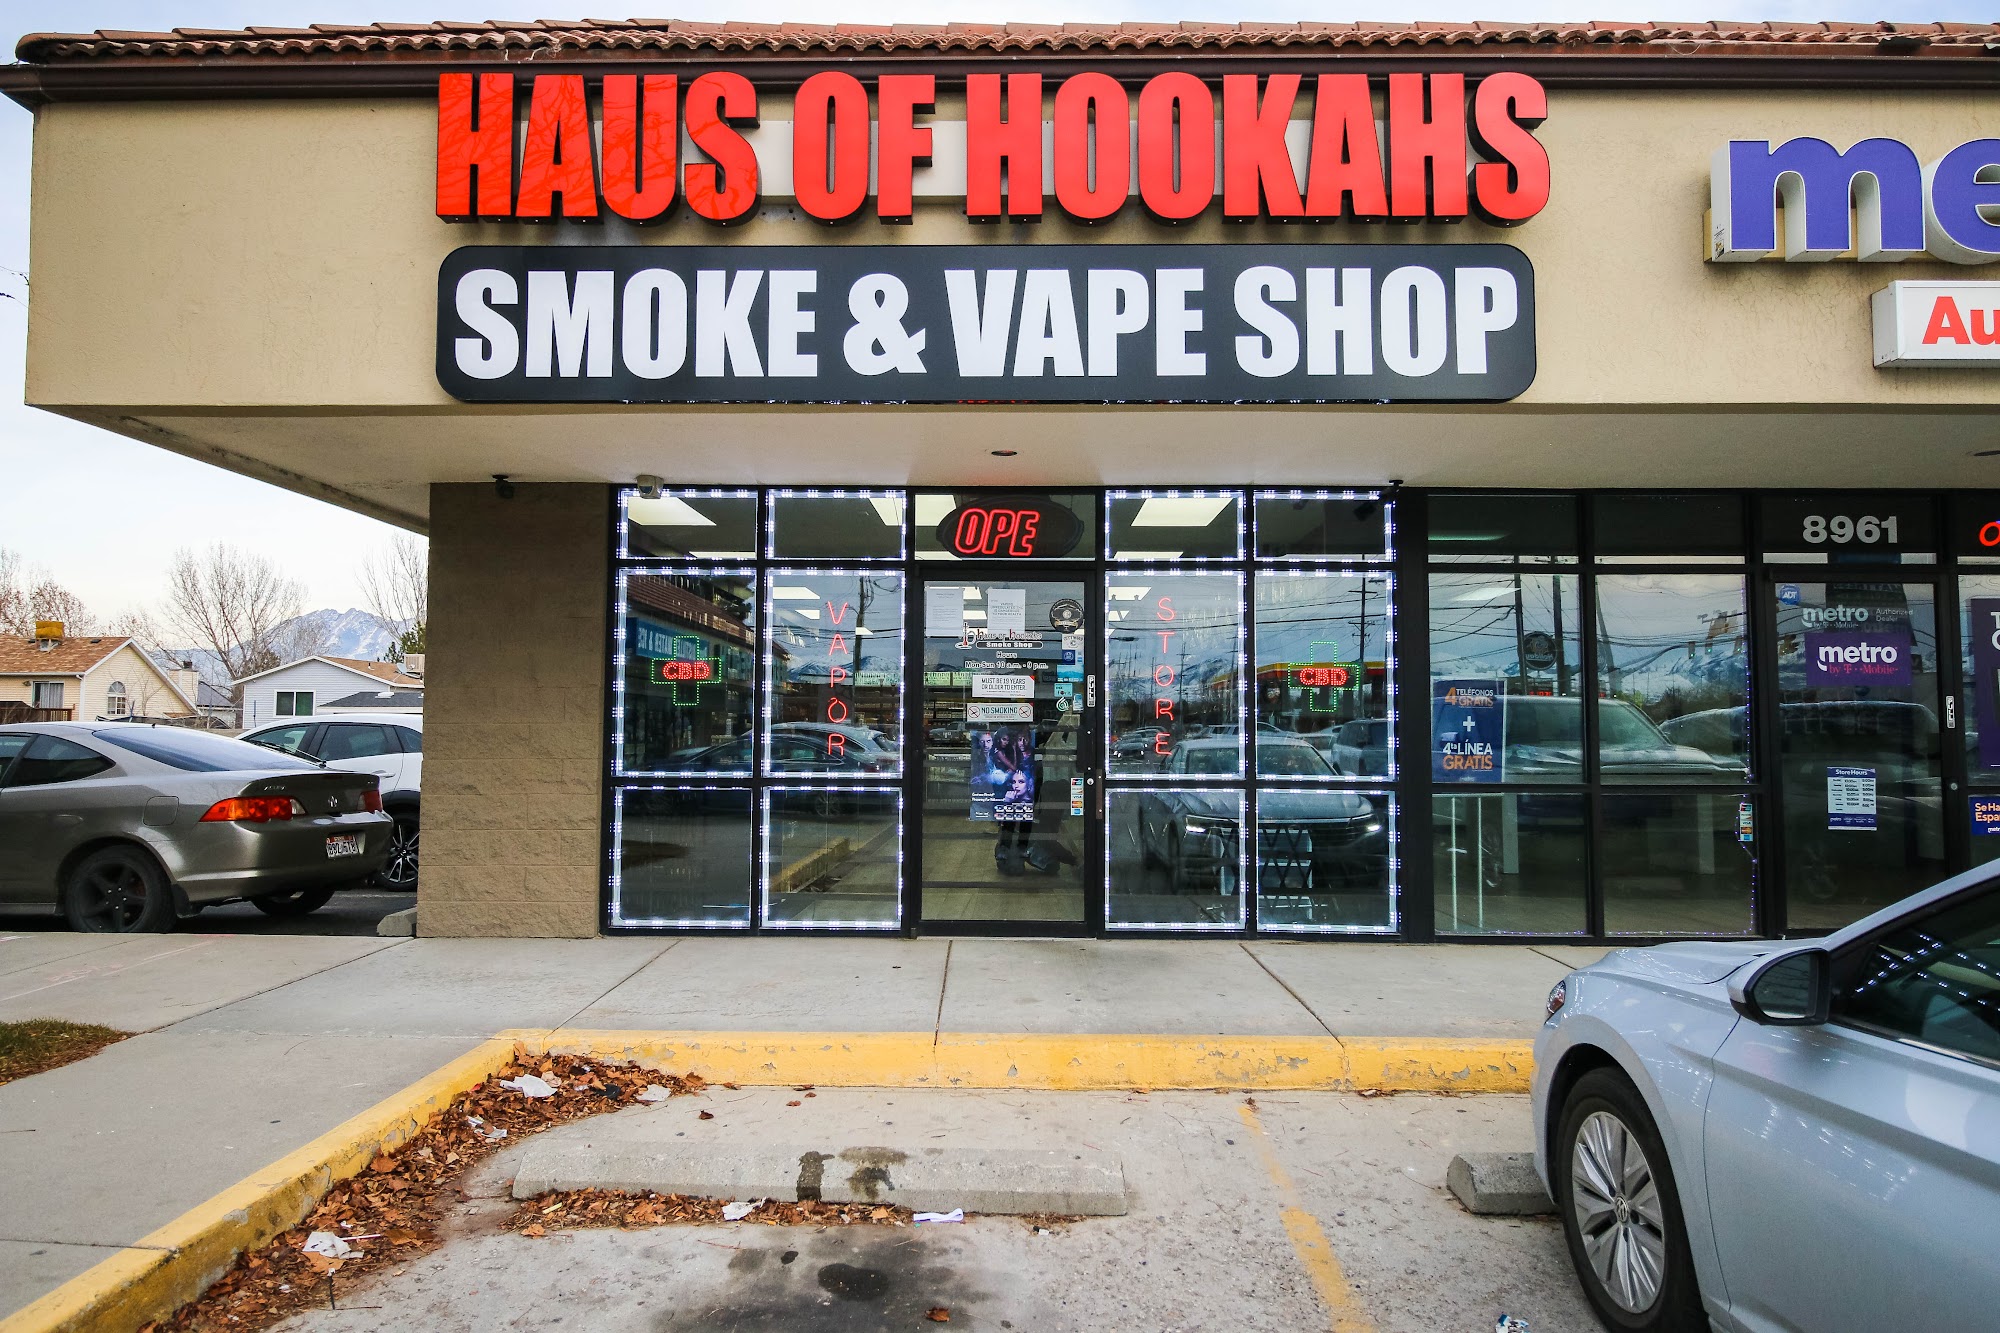 House Of Hookahs Smoke Shop and Vape Shop West Jordan